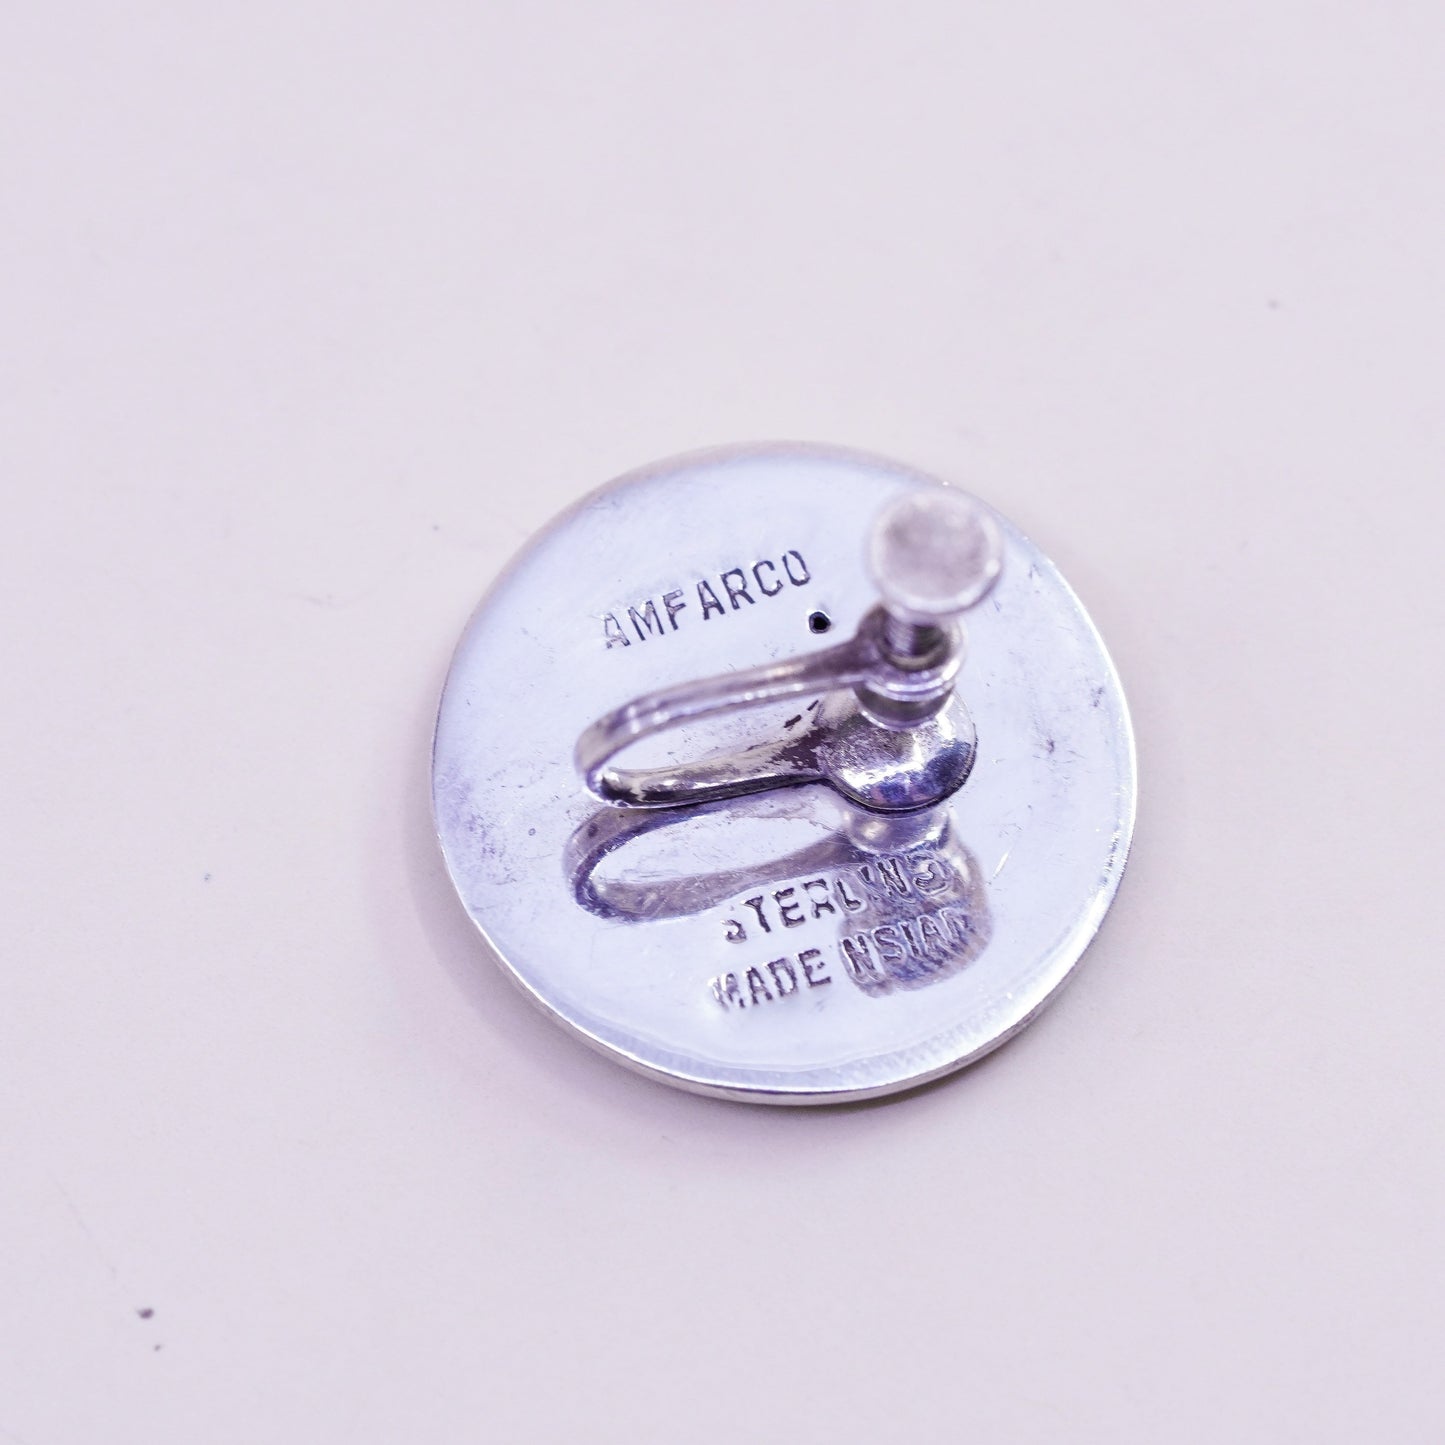 AMF arco Sterling silver handmade earrings 925 enamel screw back Indian goddess